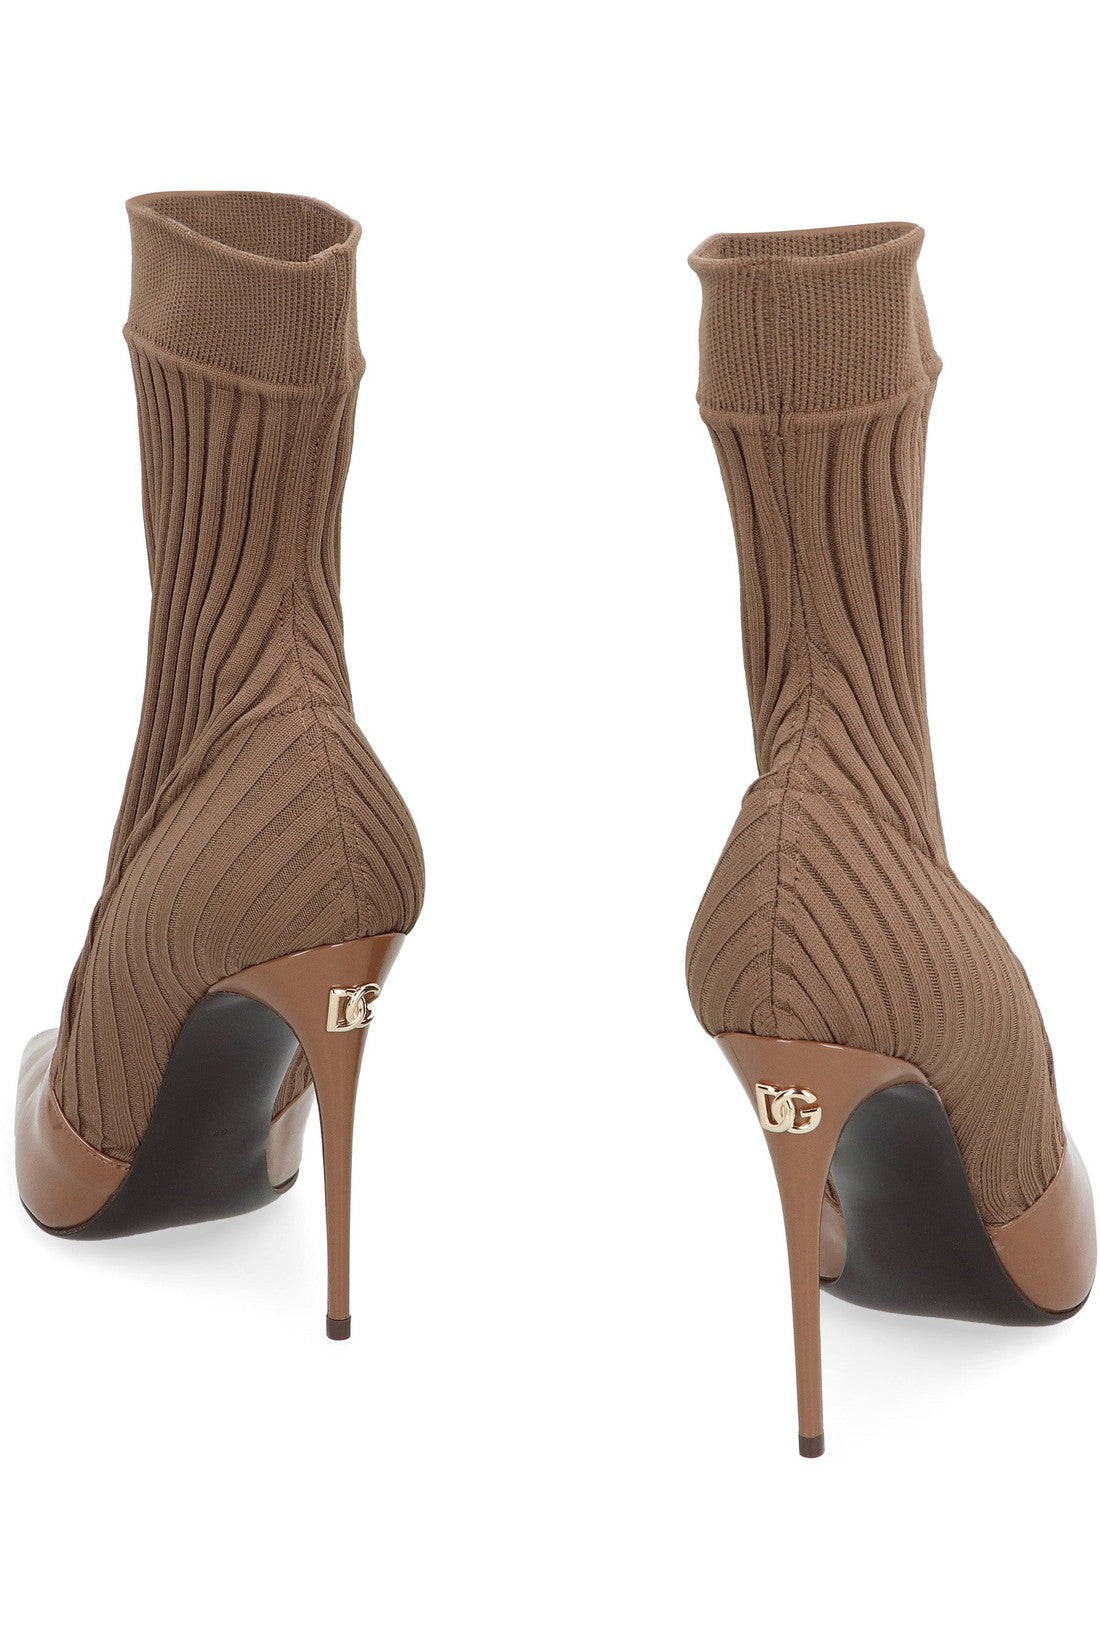 Dolce & Gabbana-OUTLET-SALE-Lollo sock ankle boots-ARCHIVIST